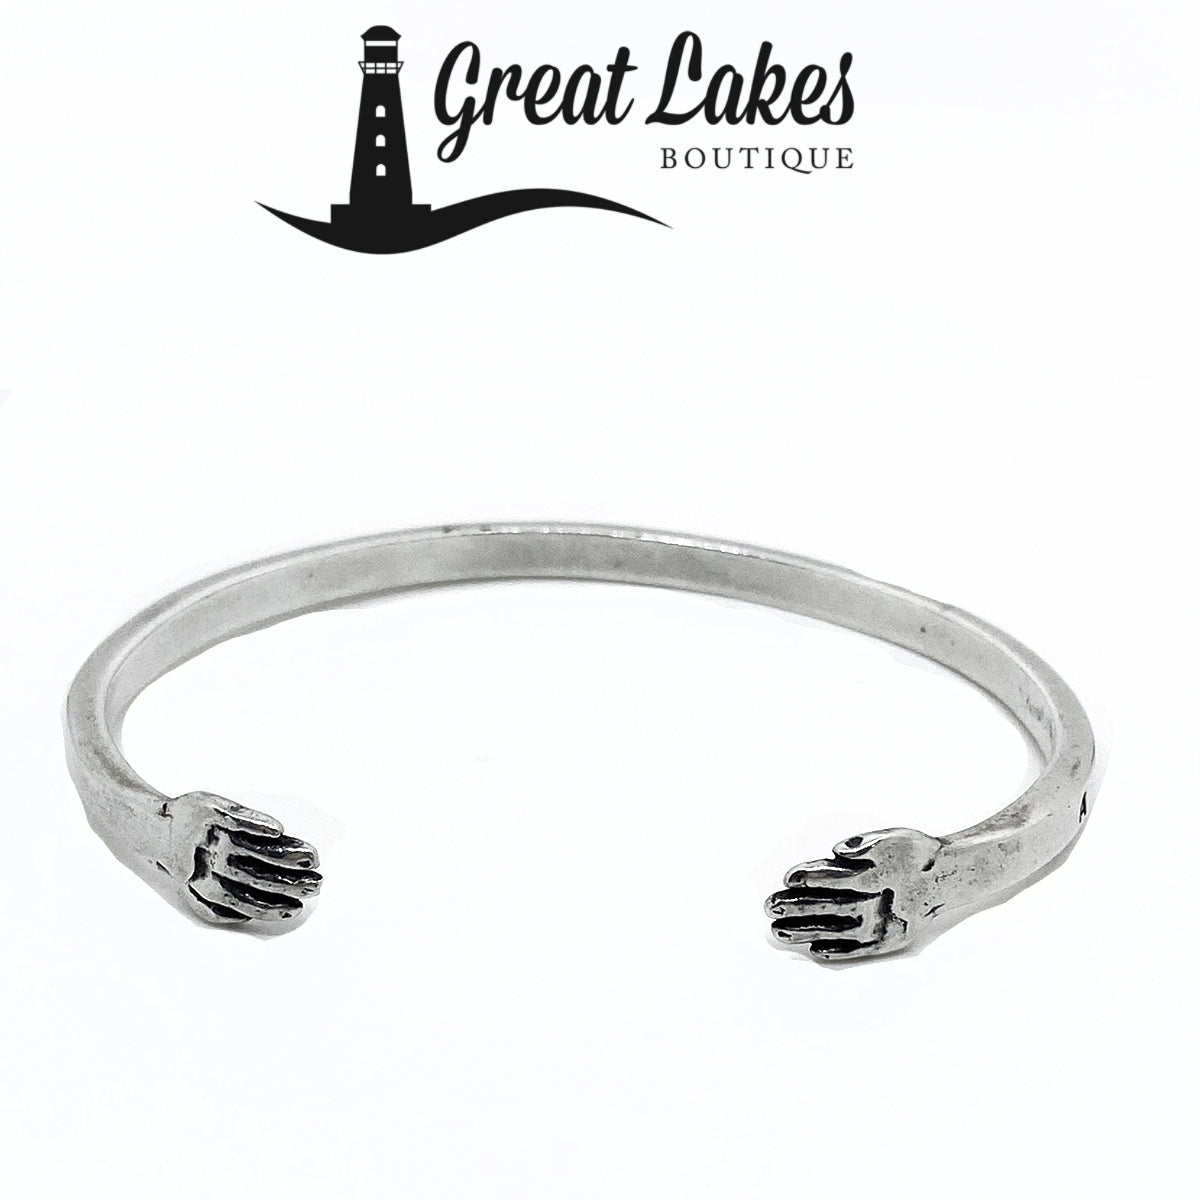 Great Lakes Boutique Comstock Silver Friendship Bracelet